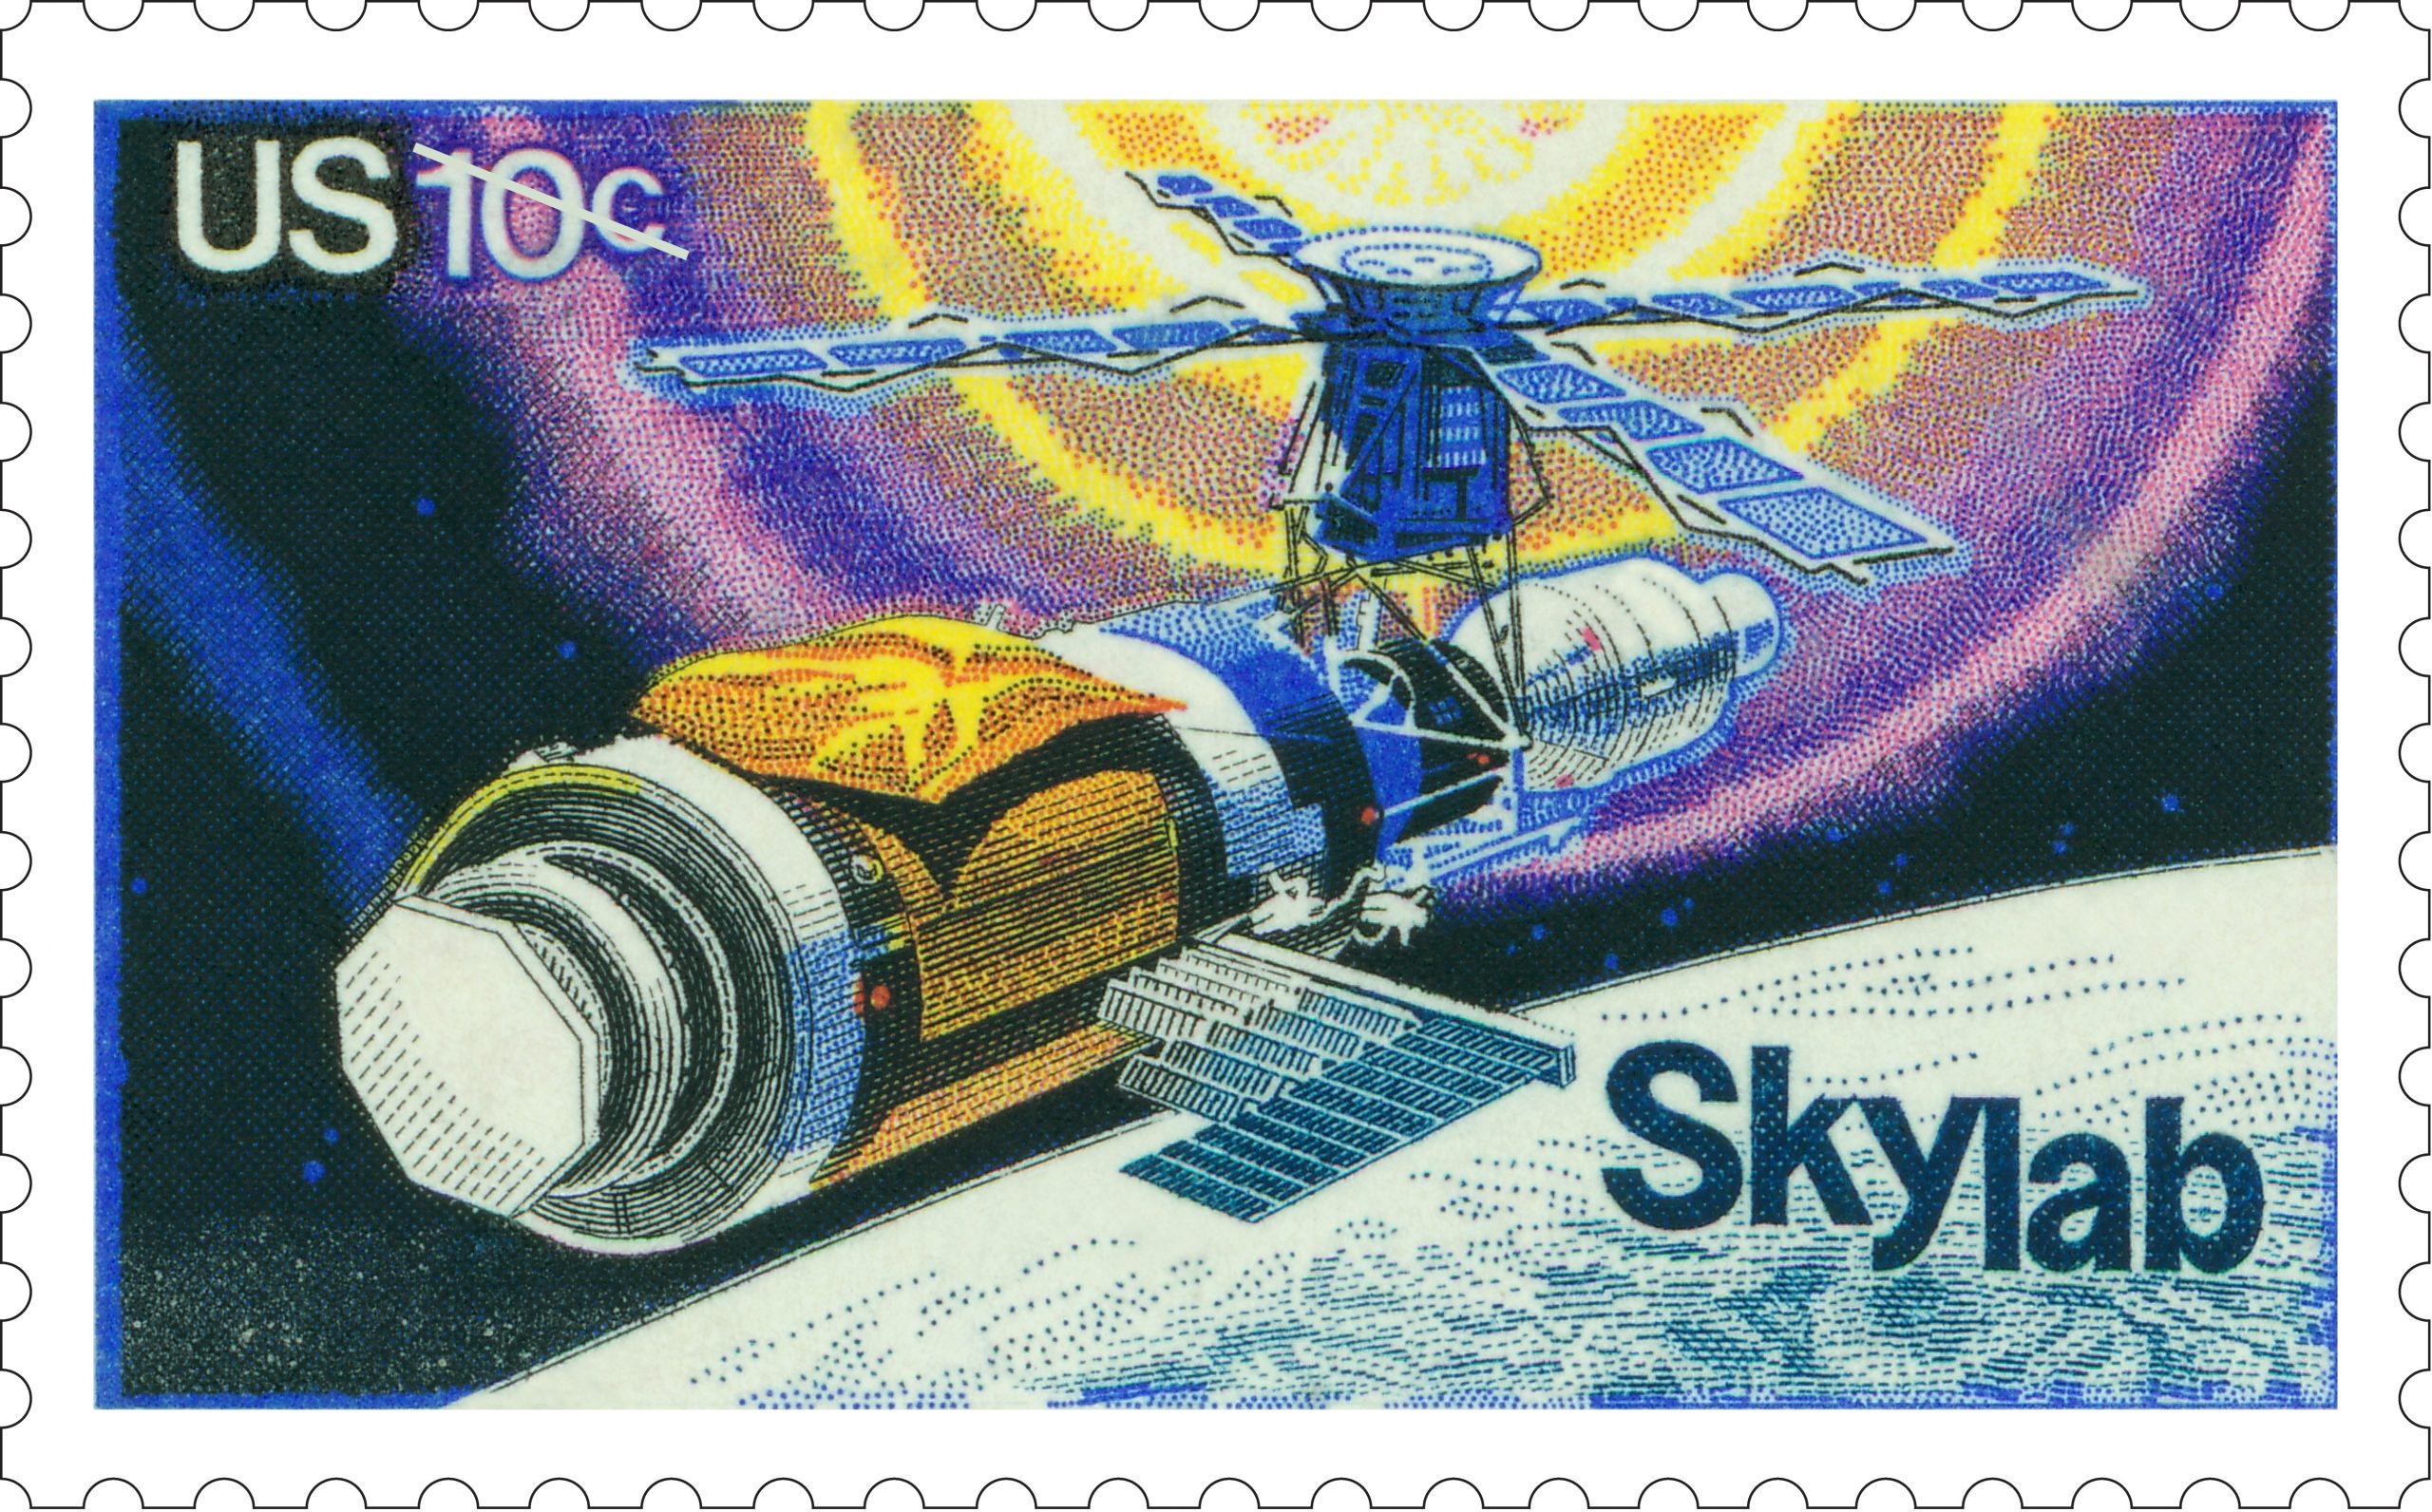 skylab-stamp